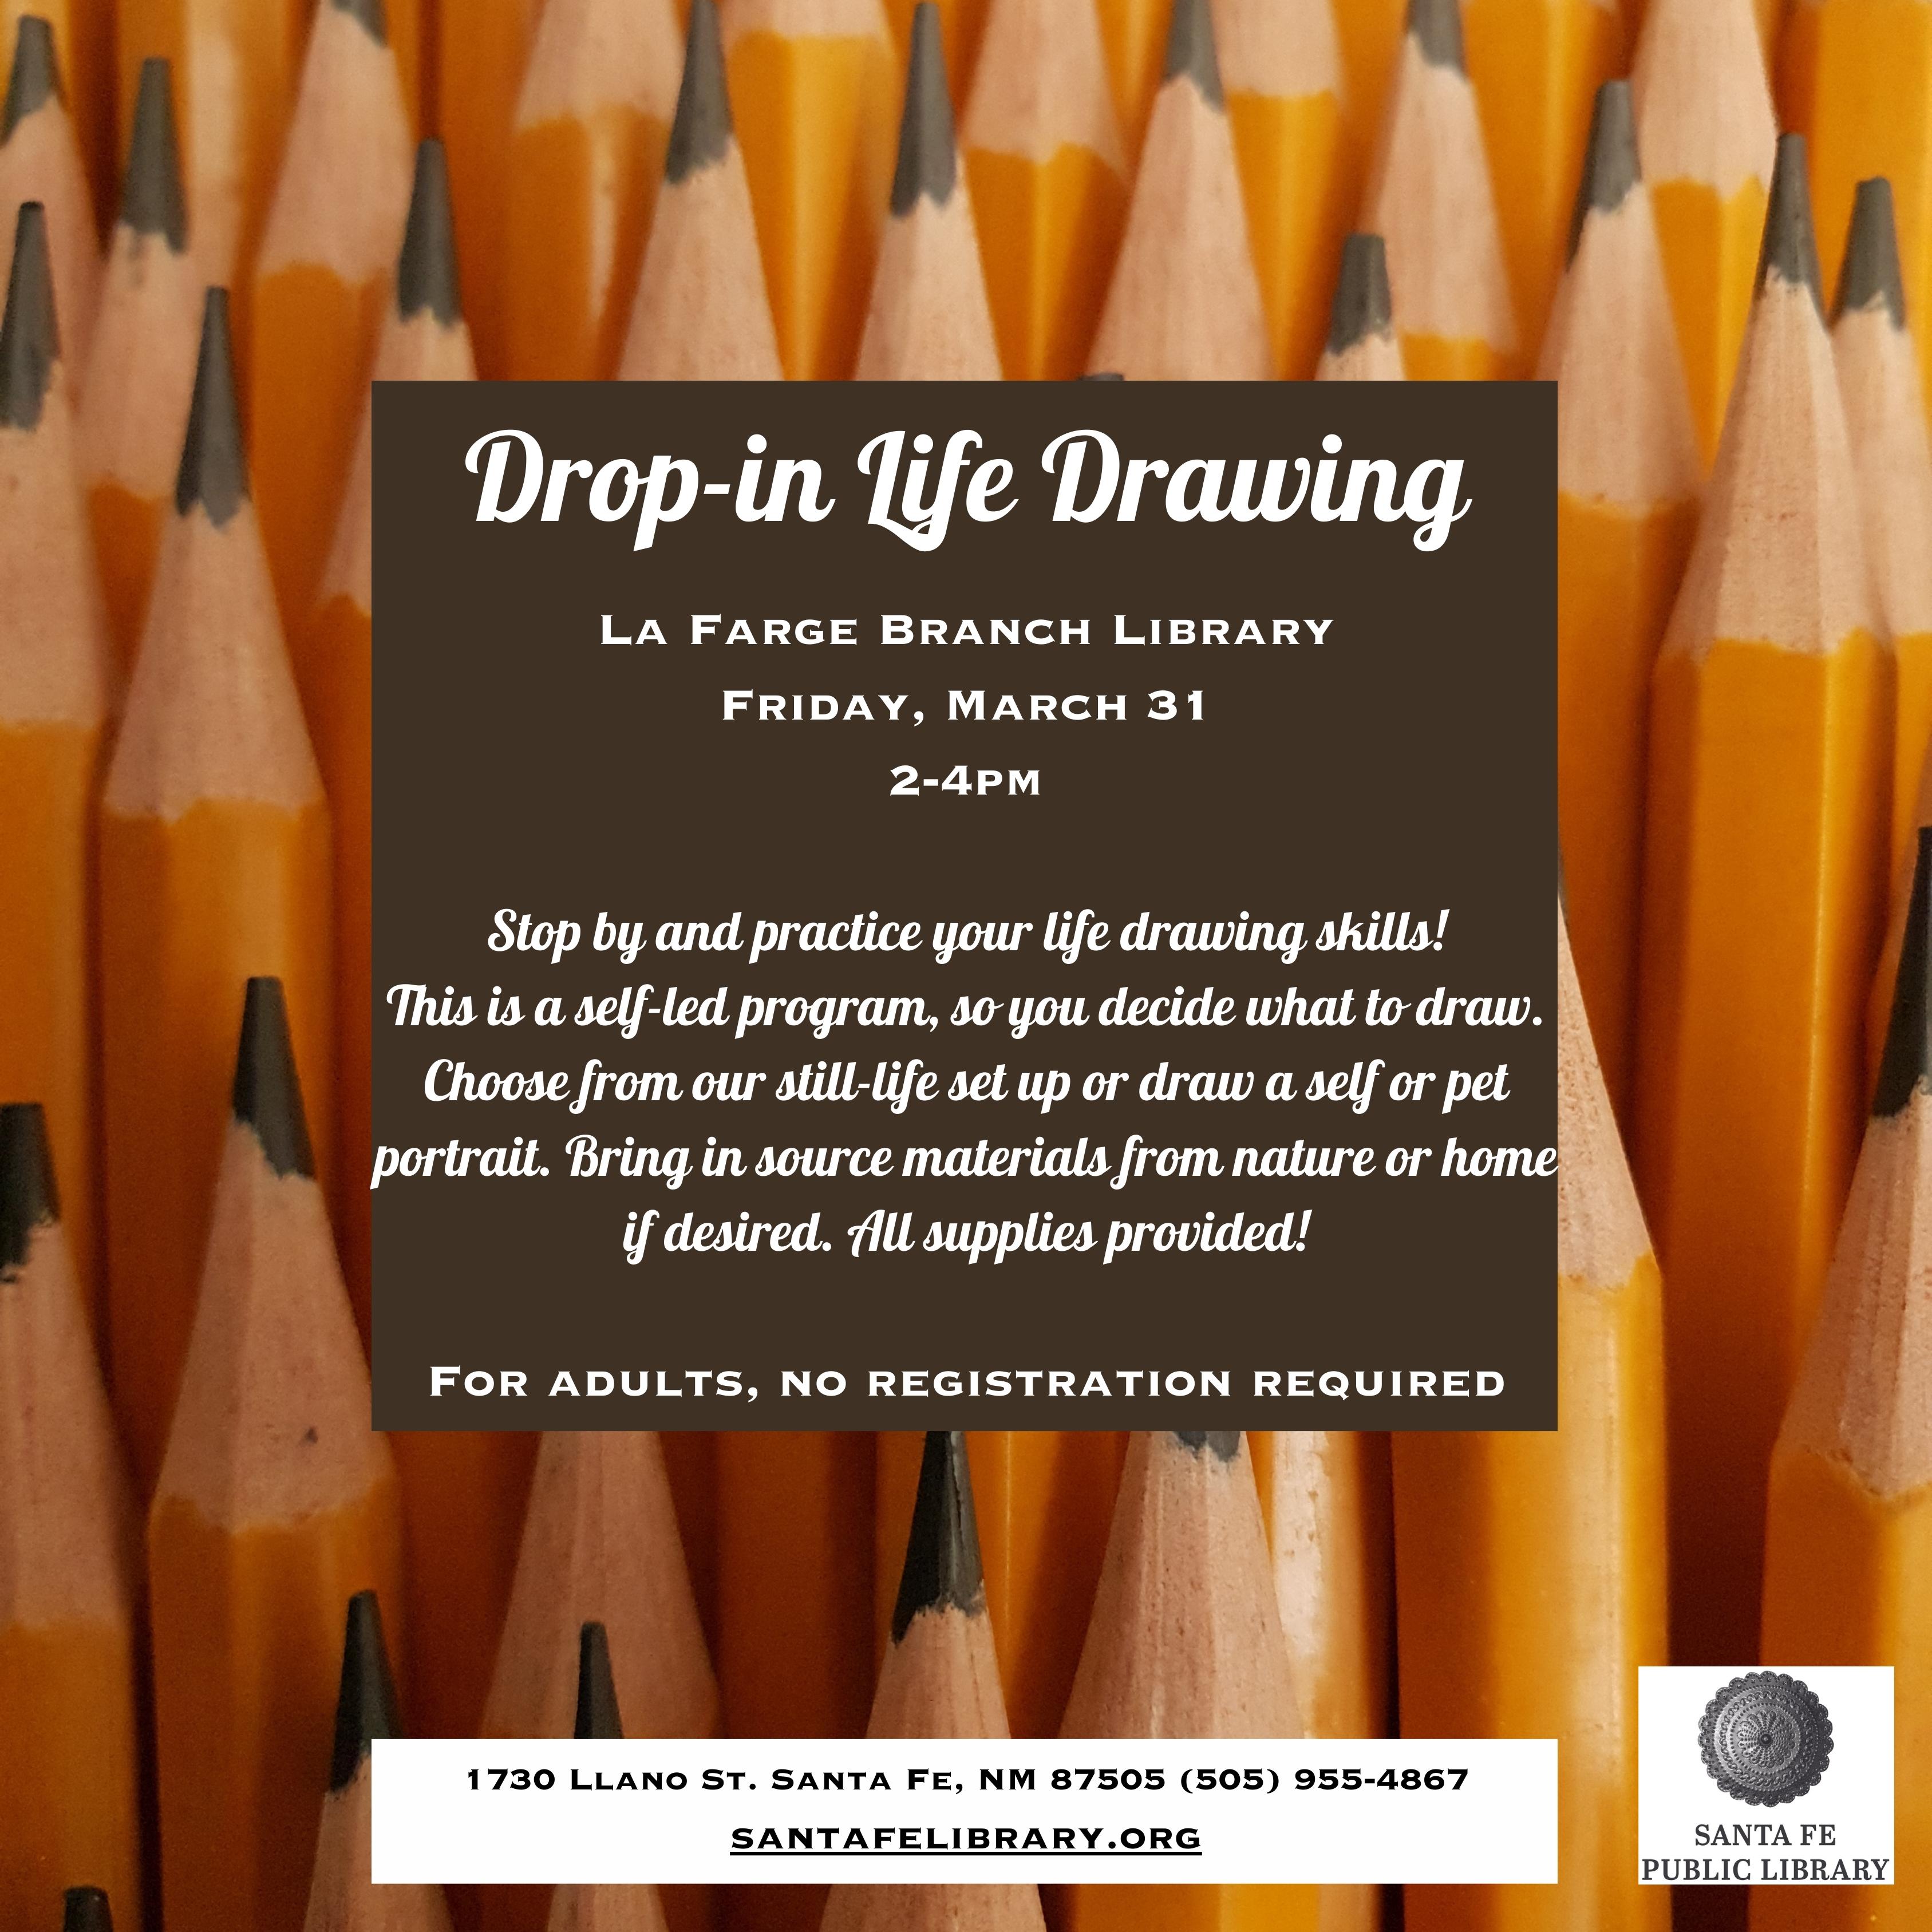 Drop in life drawing